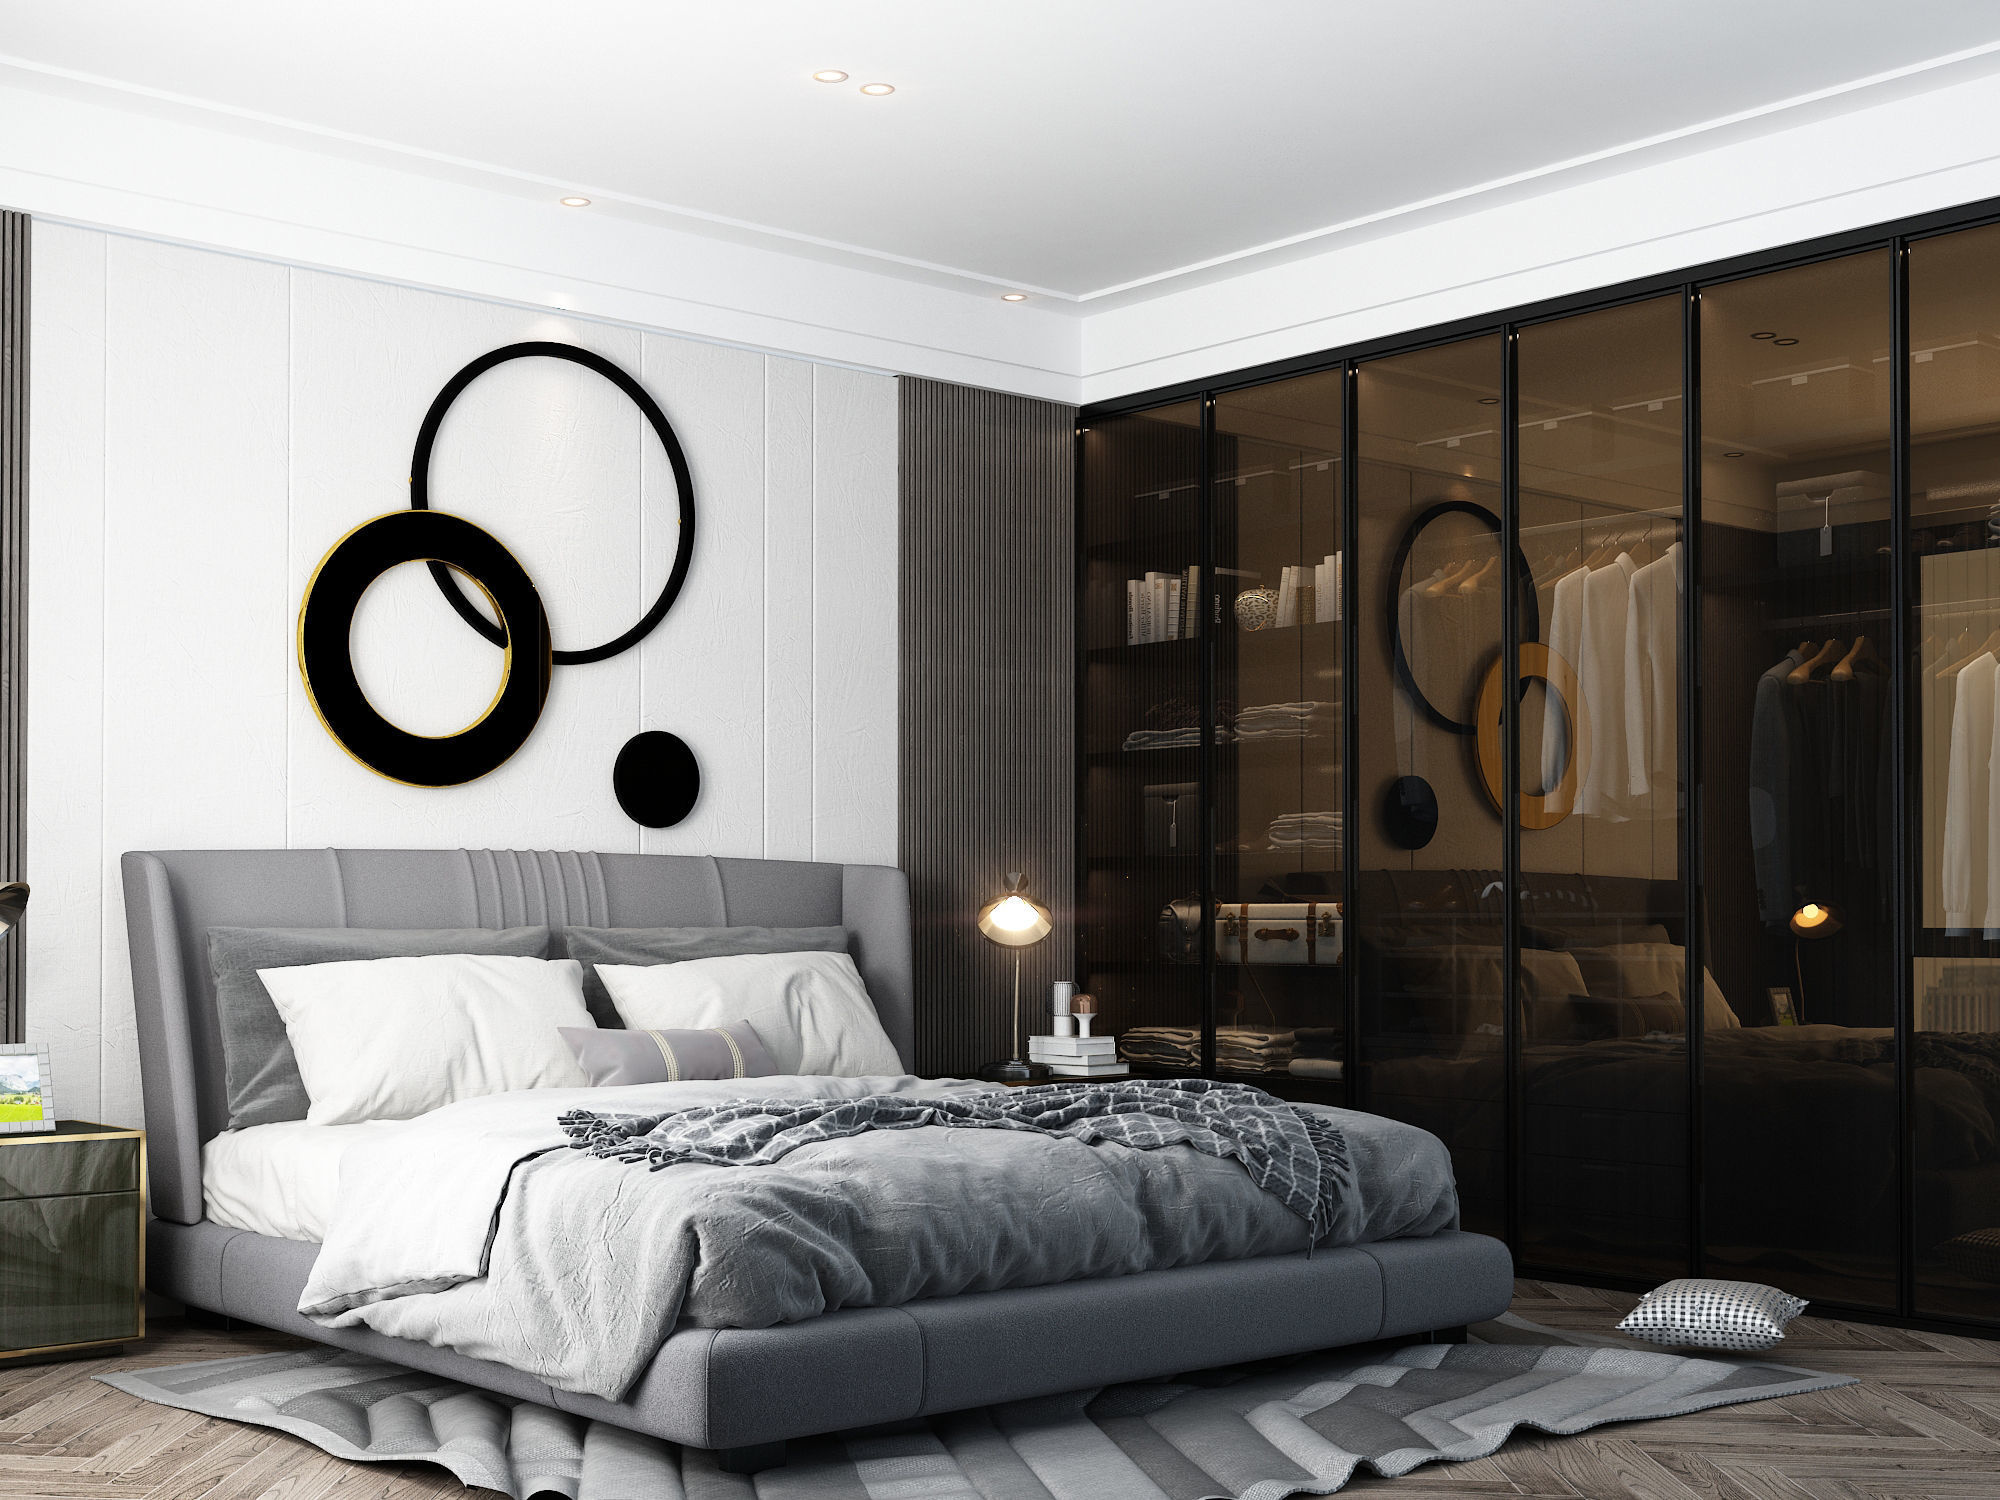 222-modern-chinese-bedroom-with-wardrobe-display-interior-design-3d-model-max-obj-3d-17070604682.jpg